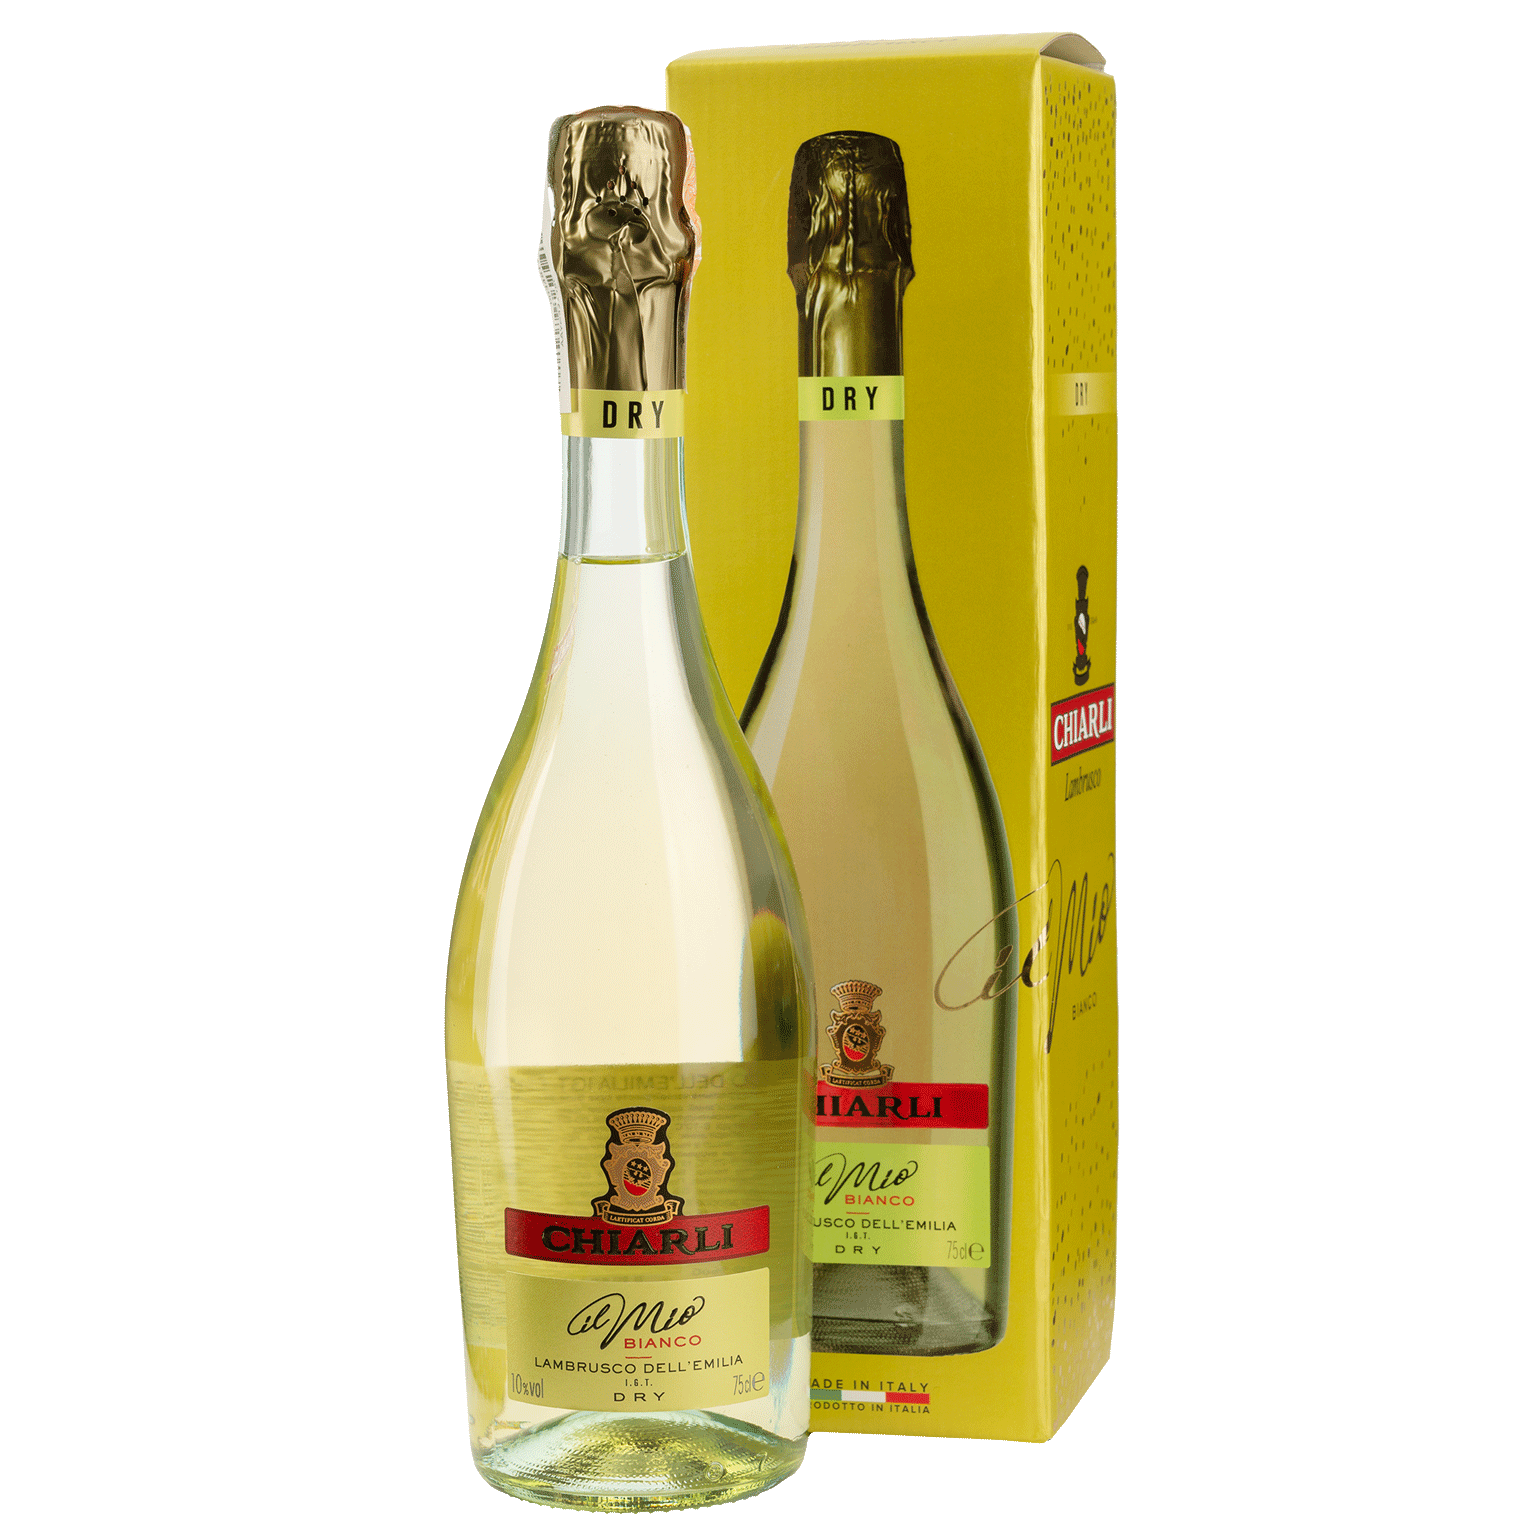 Вино игристое Chiarli Lambrusco dell 'Emilia Bianco Dry, белое, сухое, 10%, 0,75 л подарочная упаковка (Q7855) - фото 1